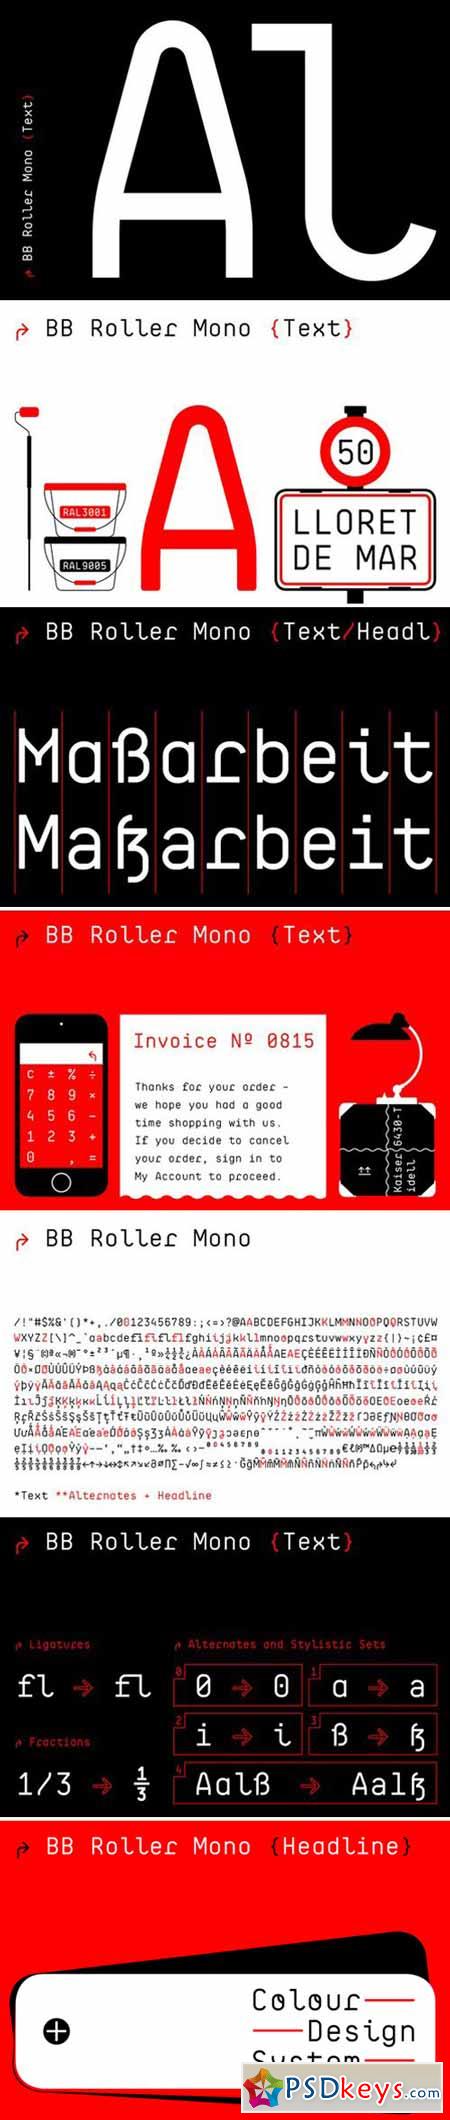 BB Roller Mono Text 363993